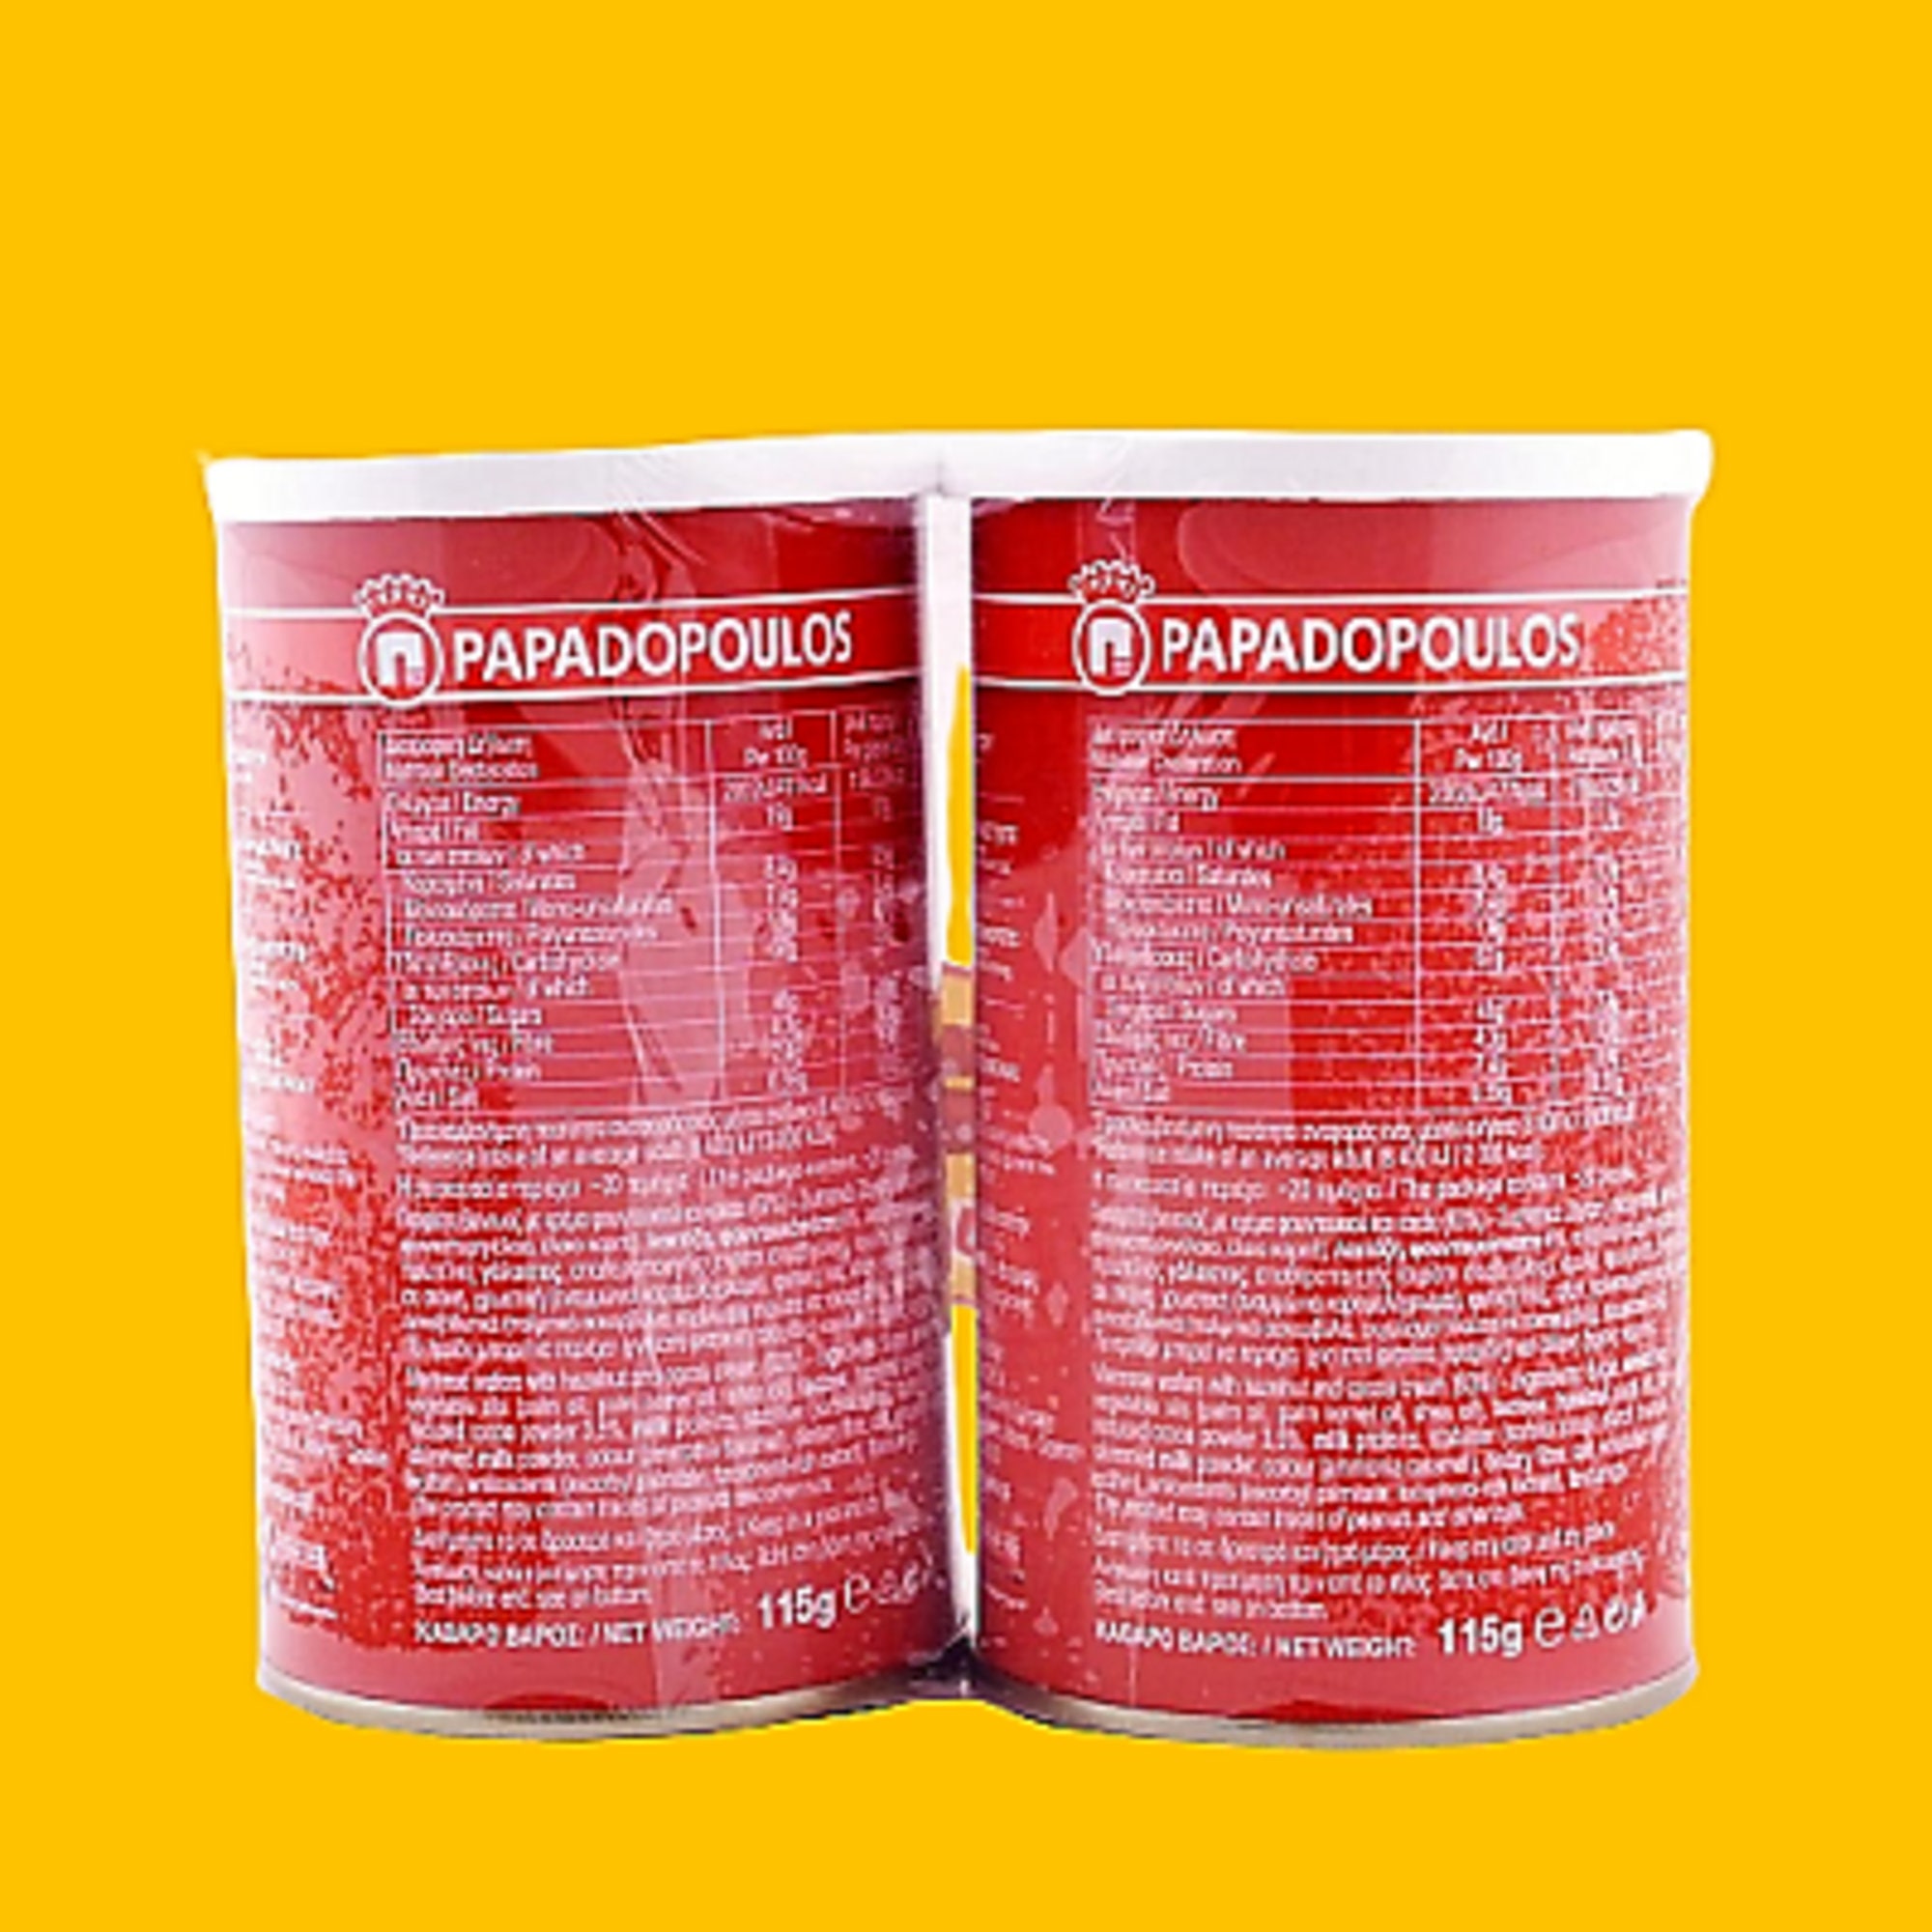 Papadopoulou Caprice Greek Wafer/praline Sticks, 30% Sugar, 250 G